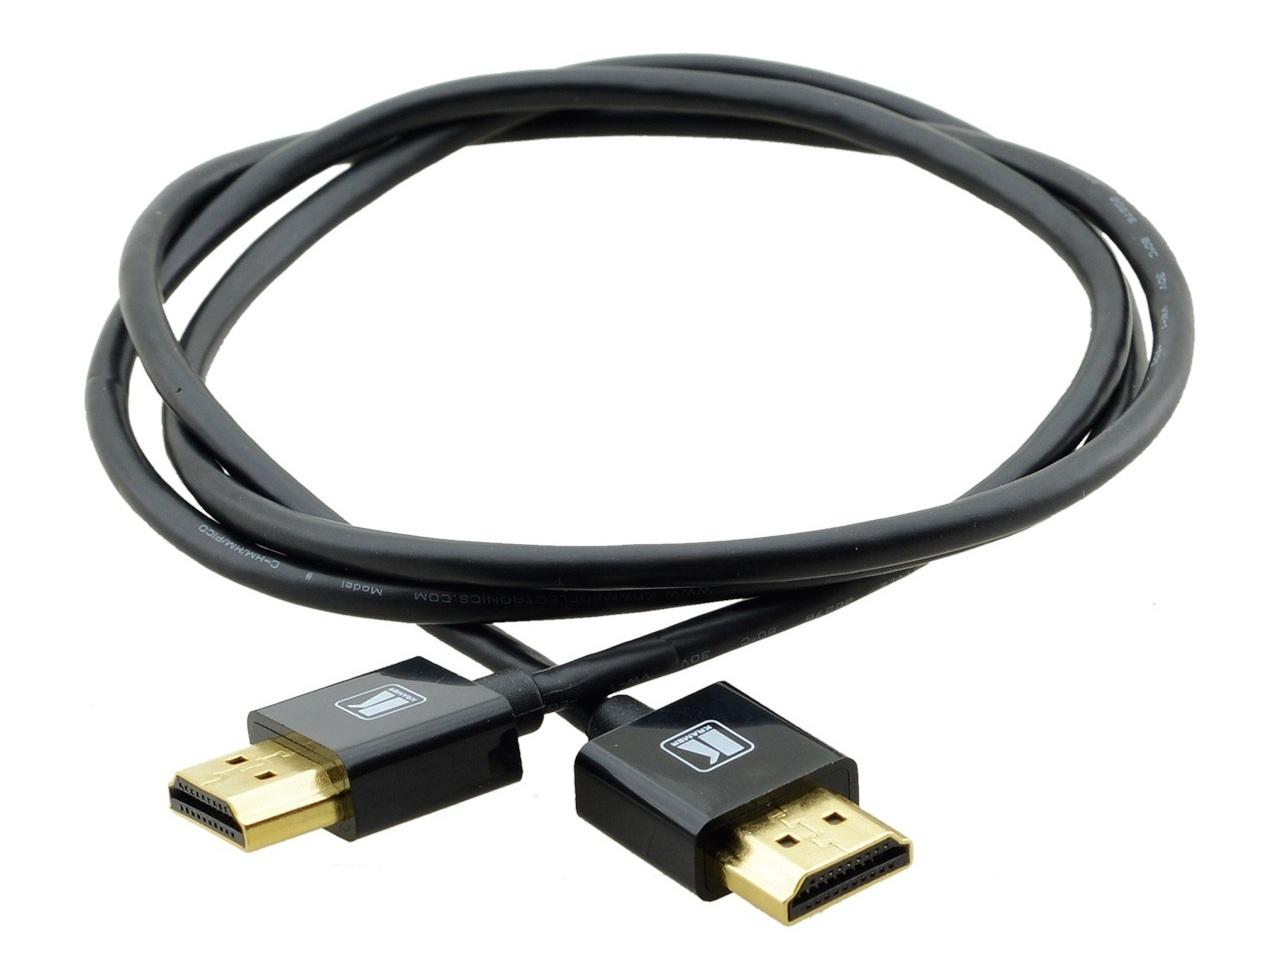 C-HM/HM/PICO/BK-10 Ultra-Slim High-Speed HDMI Cable w Ethernet/10ft/Black by Kramer